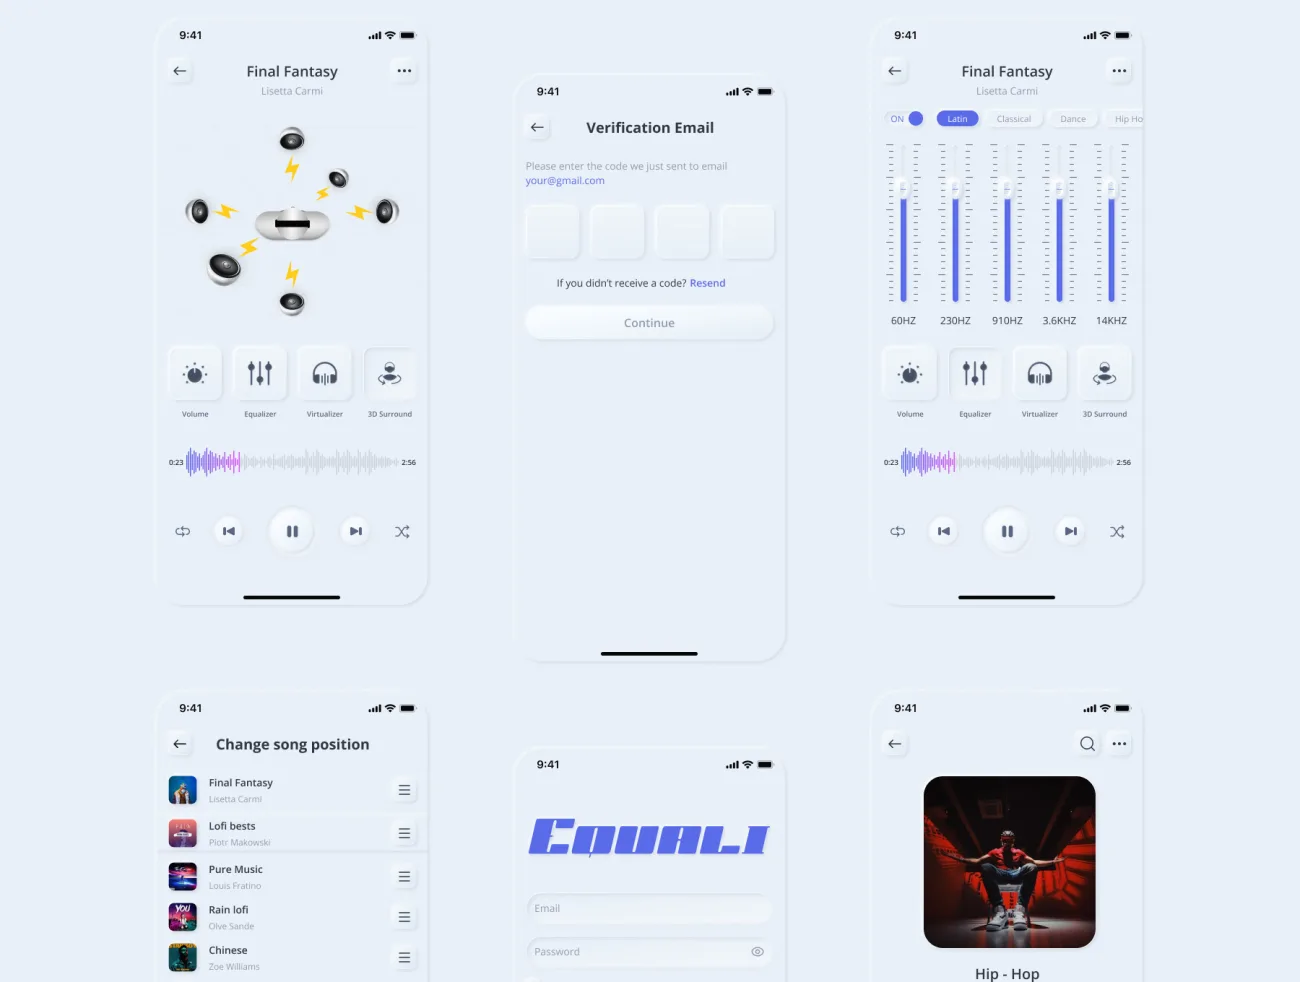 Equali - 声音均衡器音乐播放App UI套件 Equali - Equalizer app UI kit figma格式-UI/UX、播放器-到位啦UI